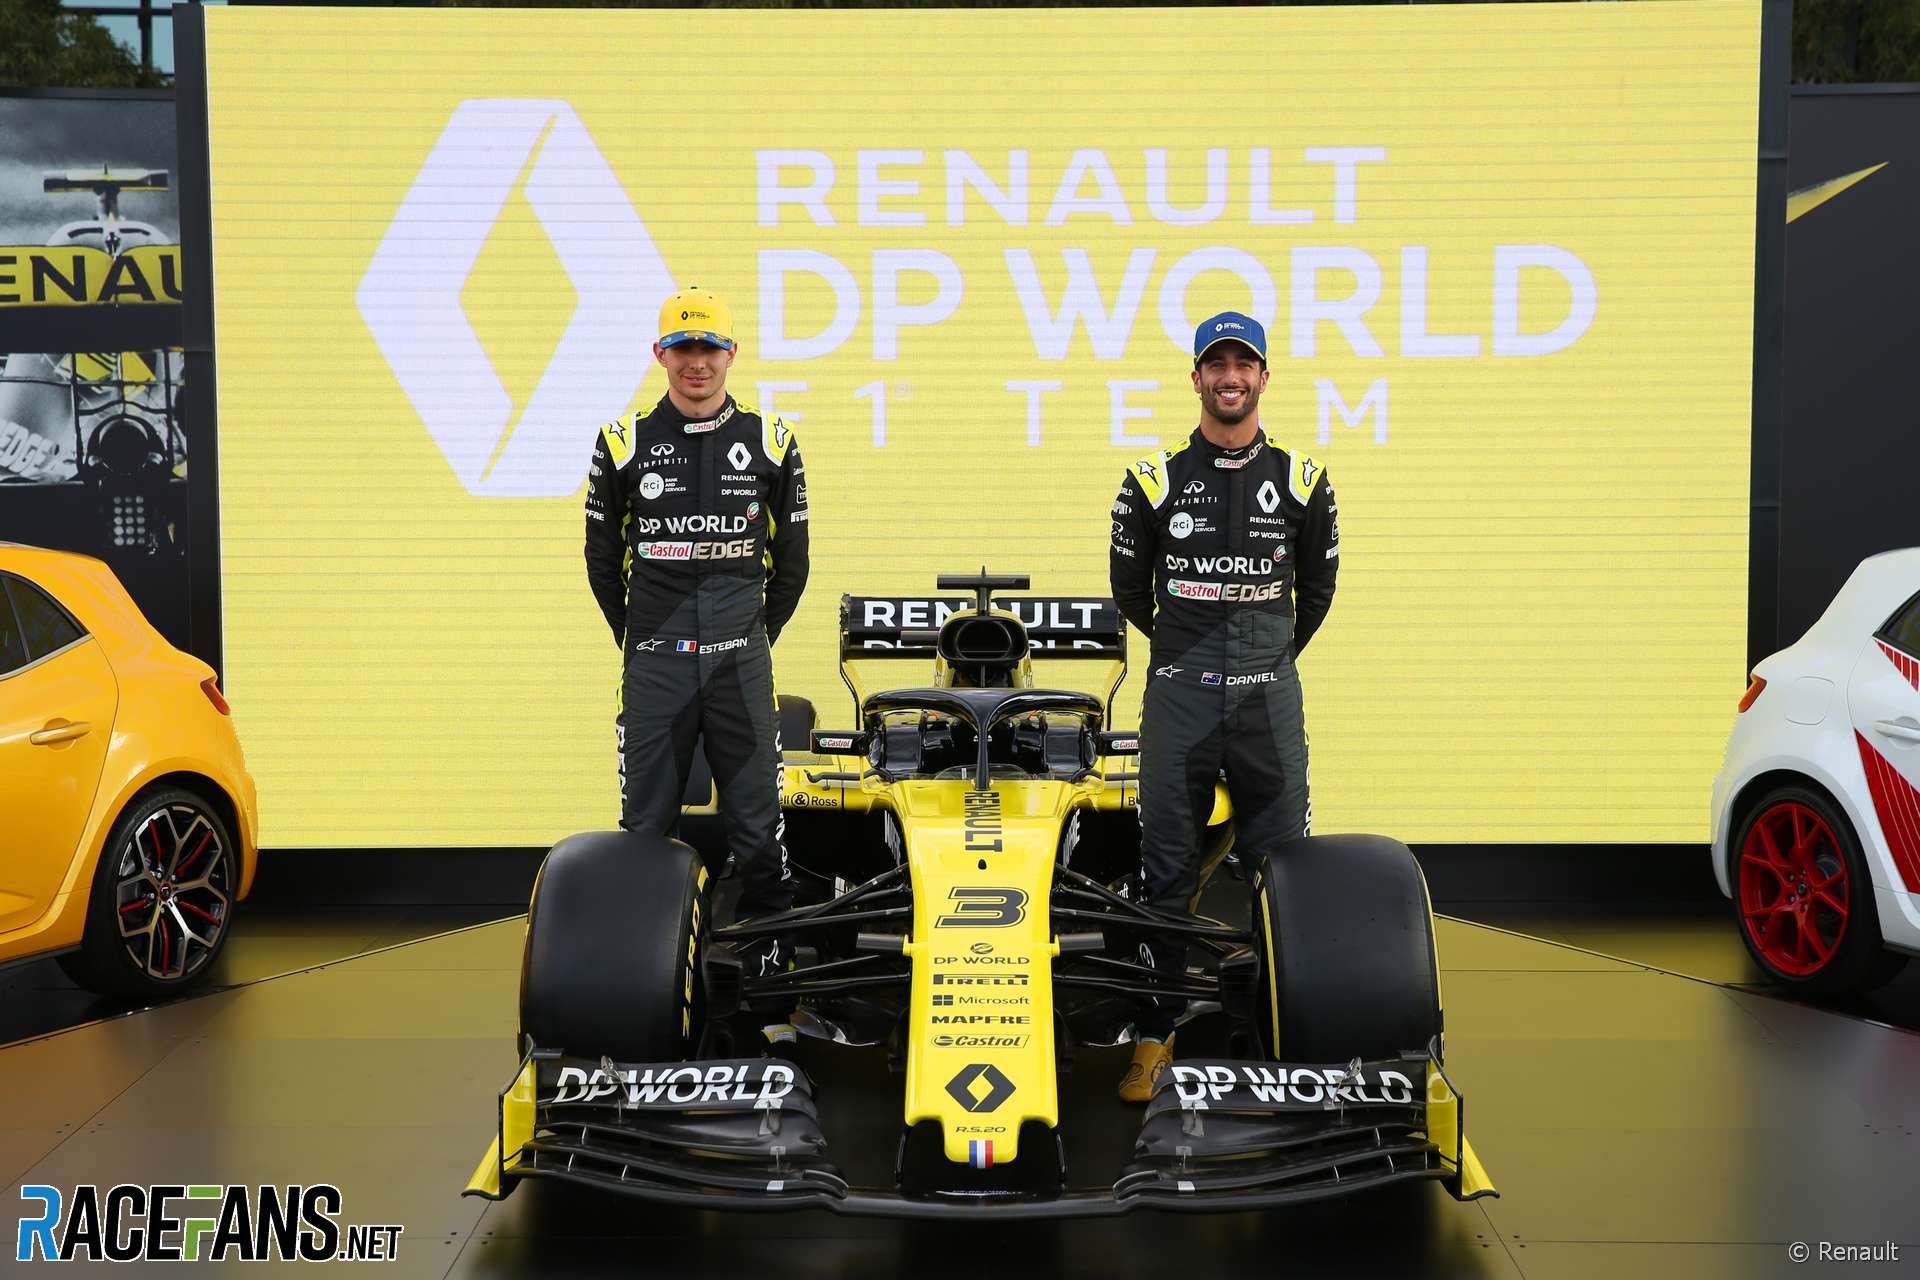 Official Renault F1 team ING Metal Chrome F1 Car keyring BNIB Alonso 